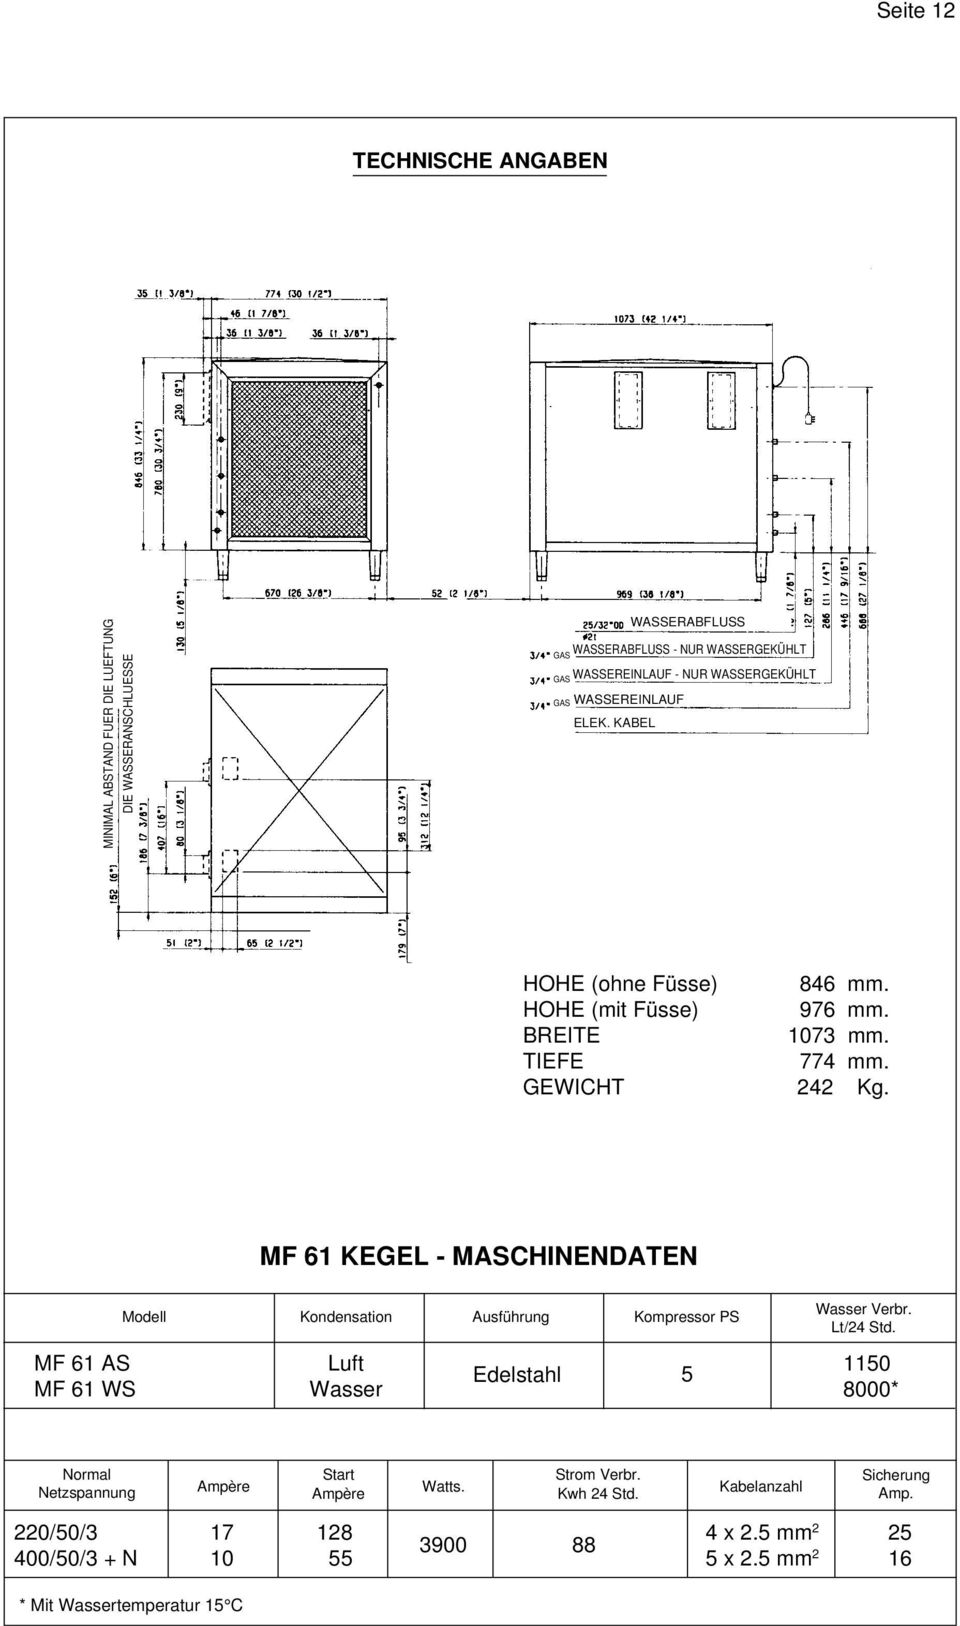 MF 61 KEGEL - MASCHINENDATEN Modell Kondensation Ausführung Kompressor PS Wasser Verbr. Lt/24 Std.